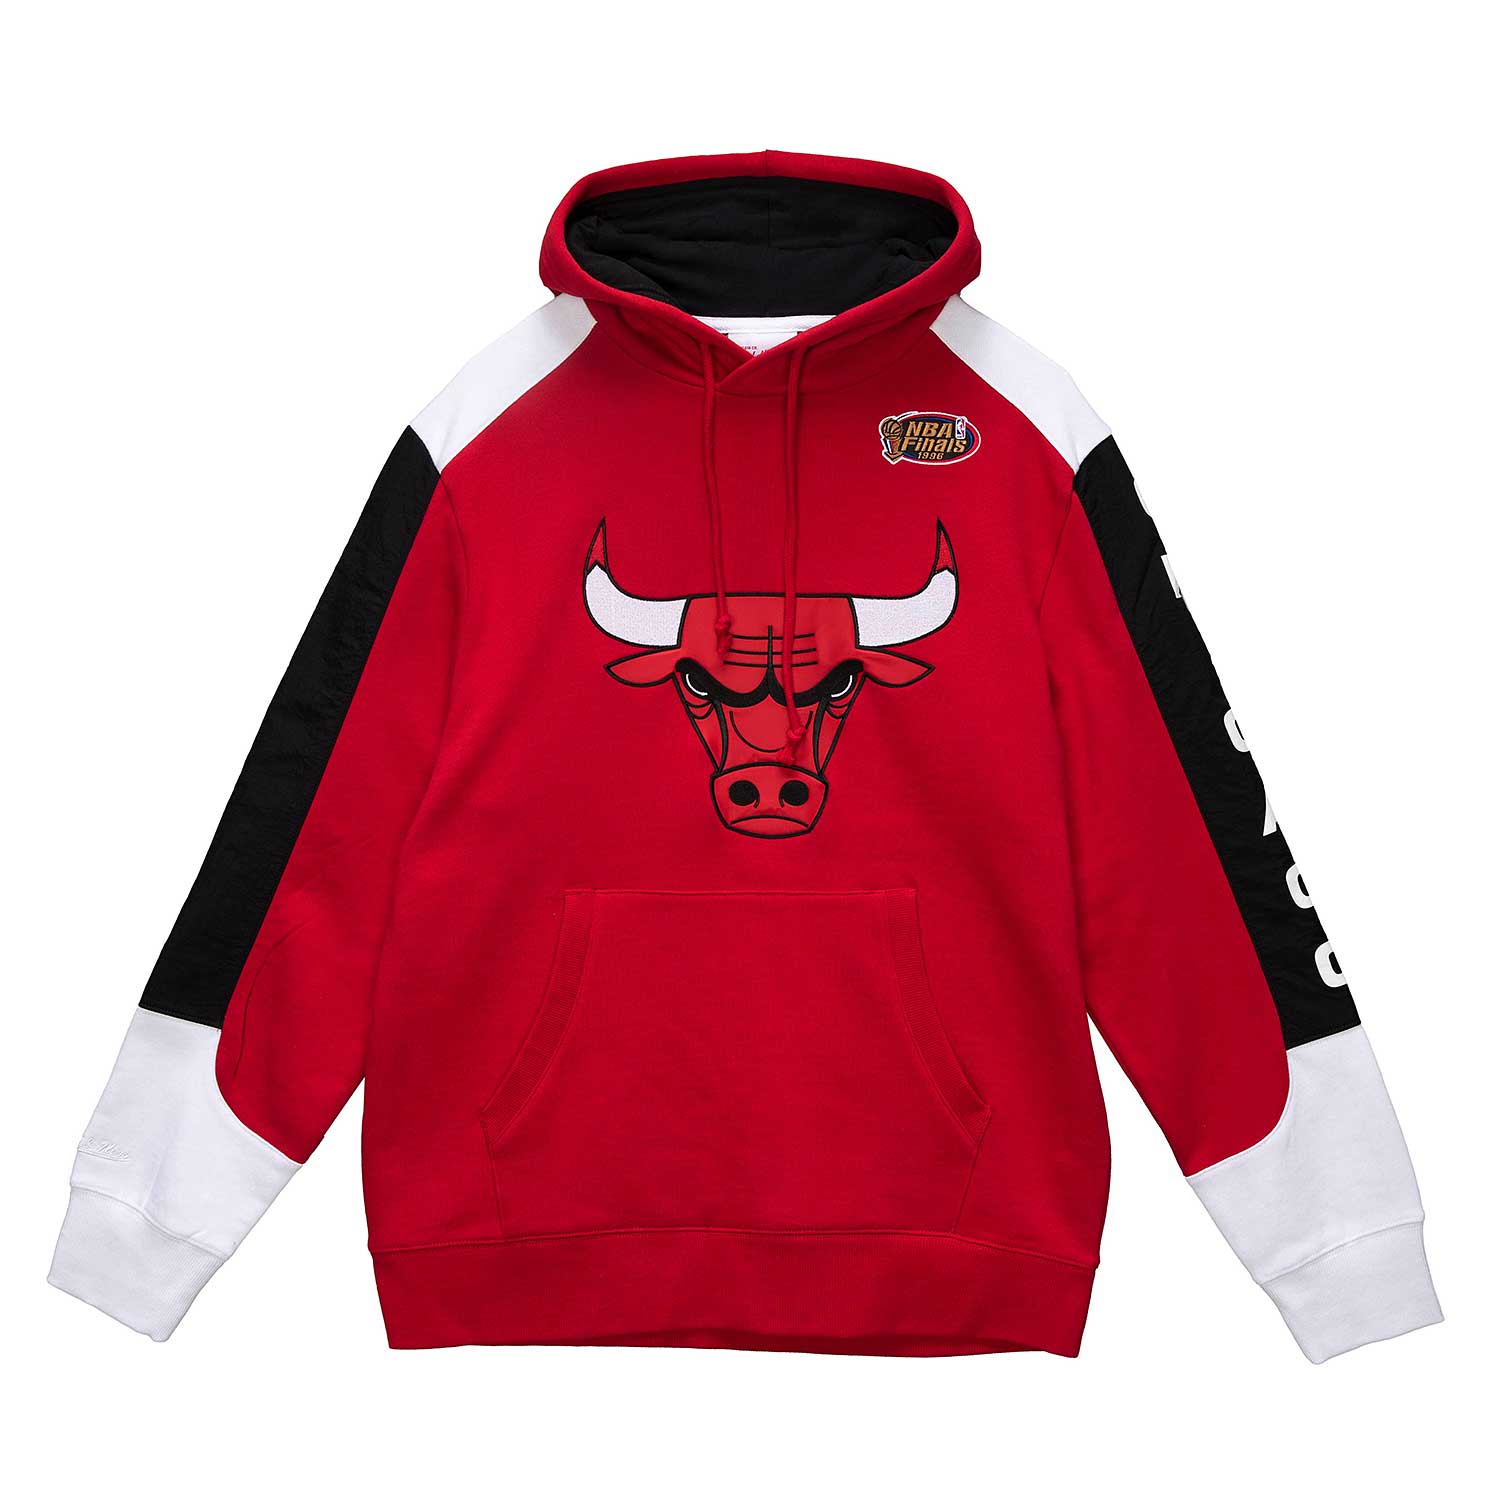 Official Chicago Bulls Hoodies, Bulls Sweatshirts, Pullovers